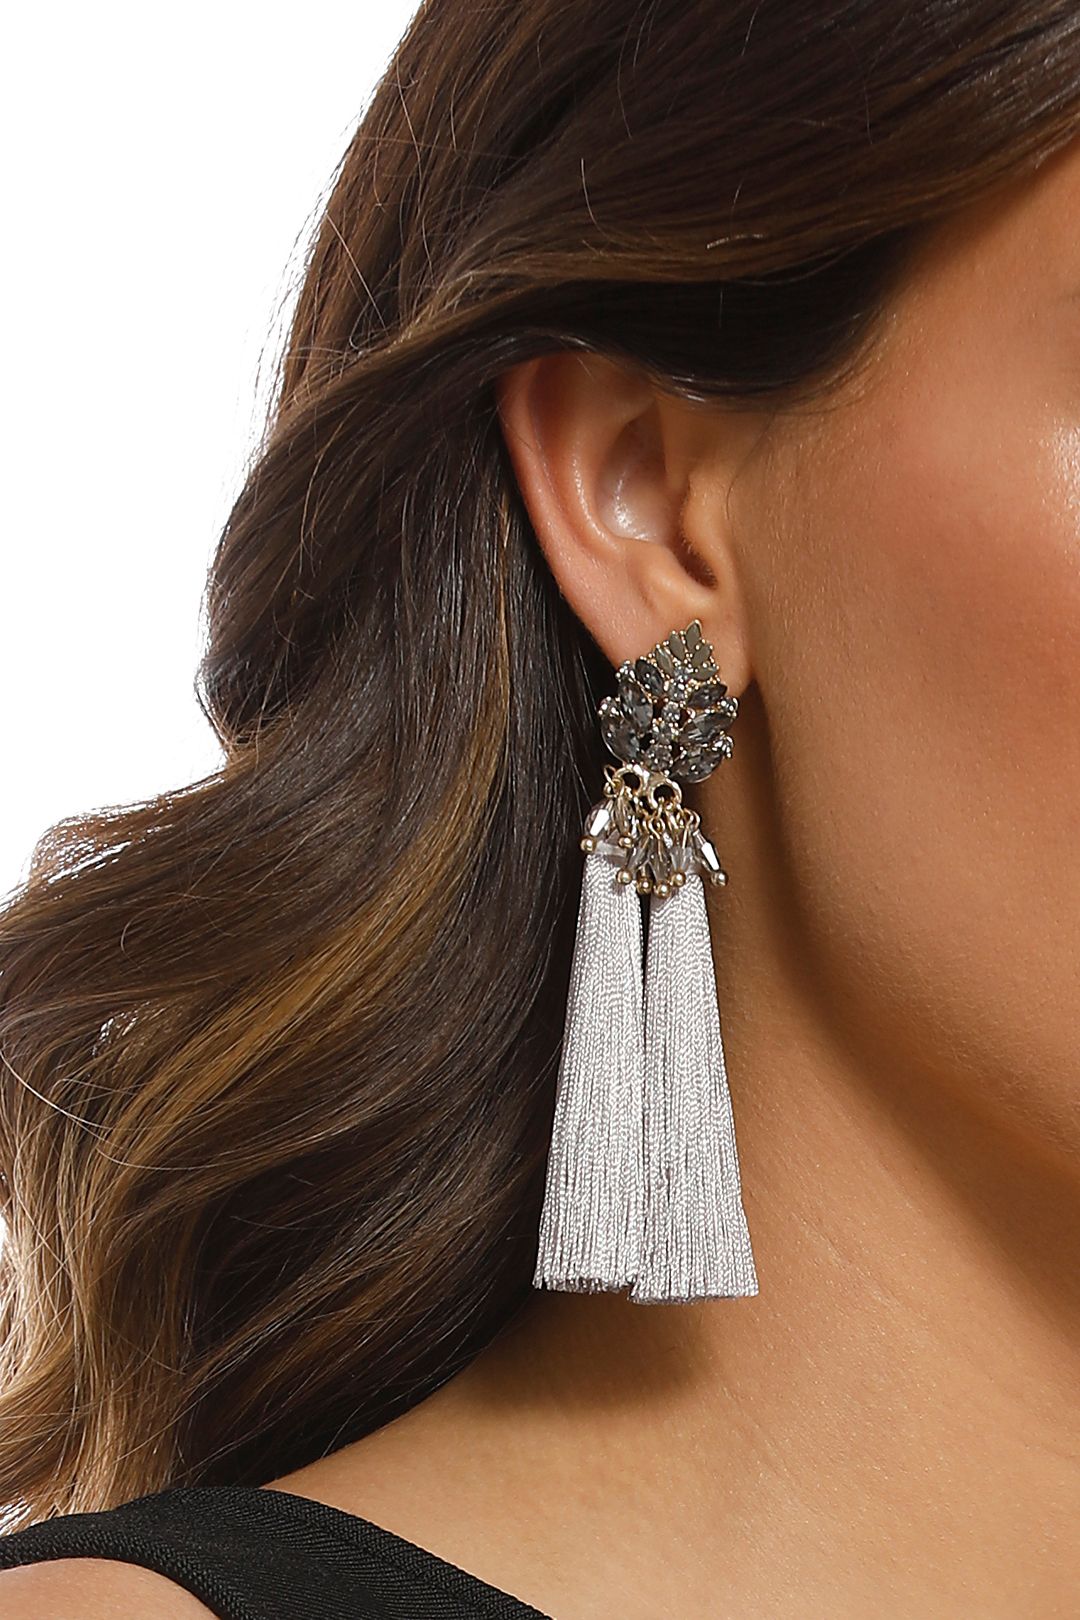 Adorne - Jewelled Top Tassel Earrings - Grey Gold - Product